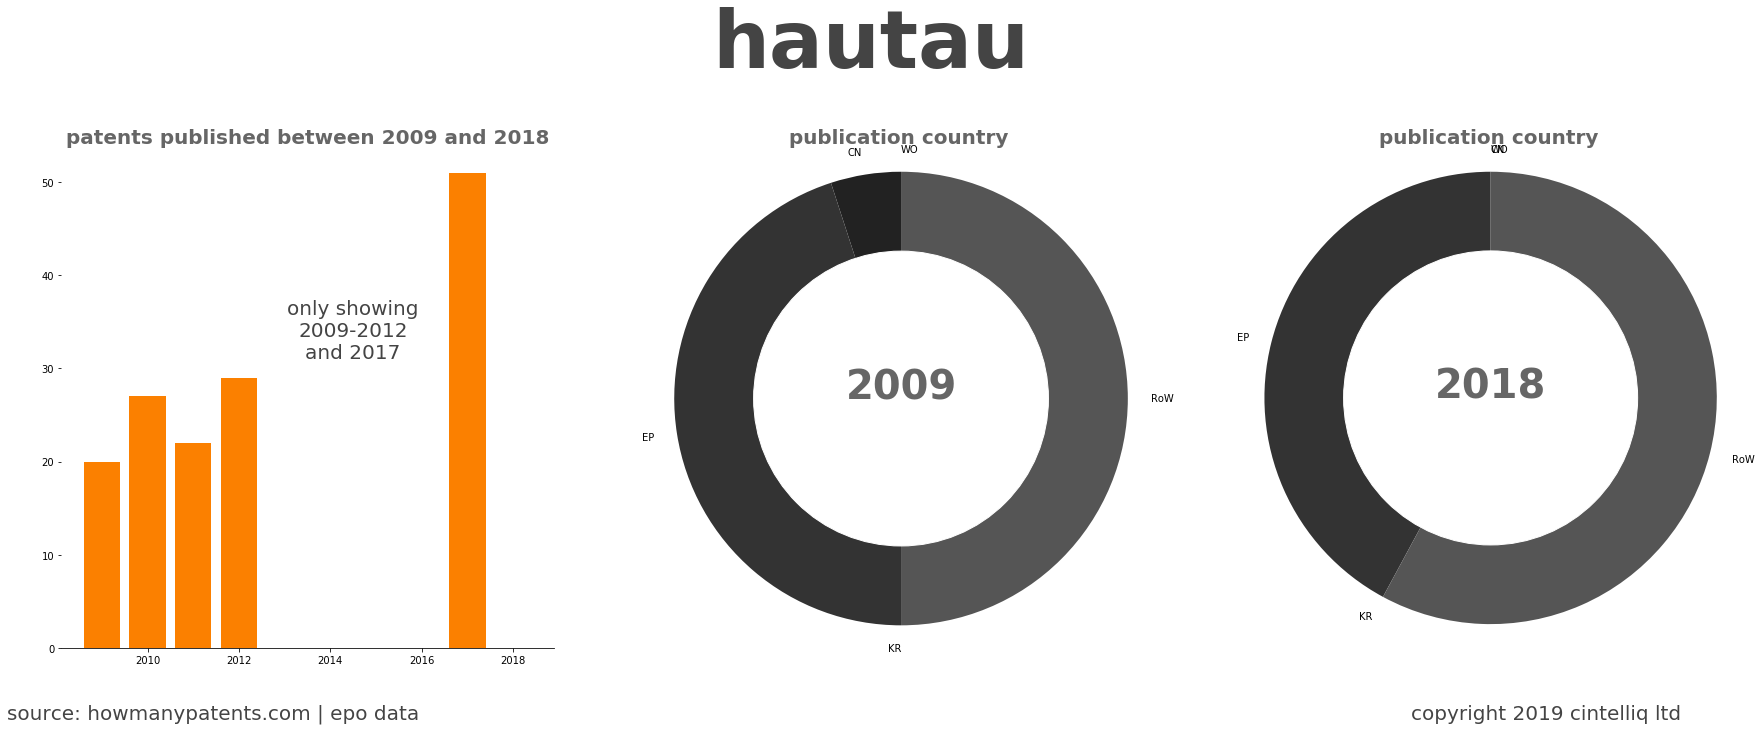 summary of patents for Hautau